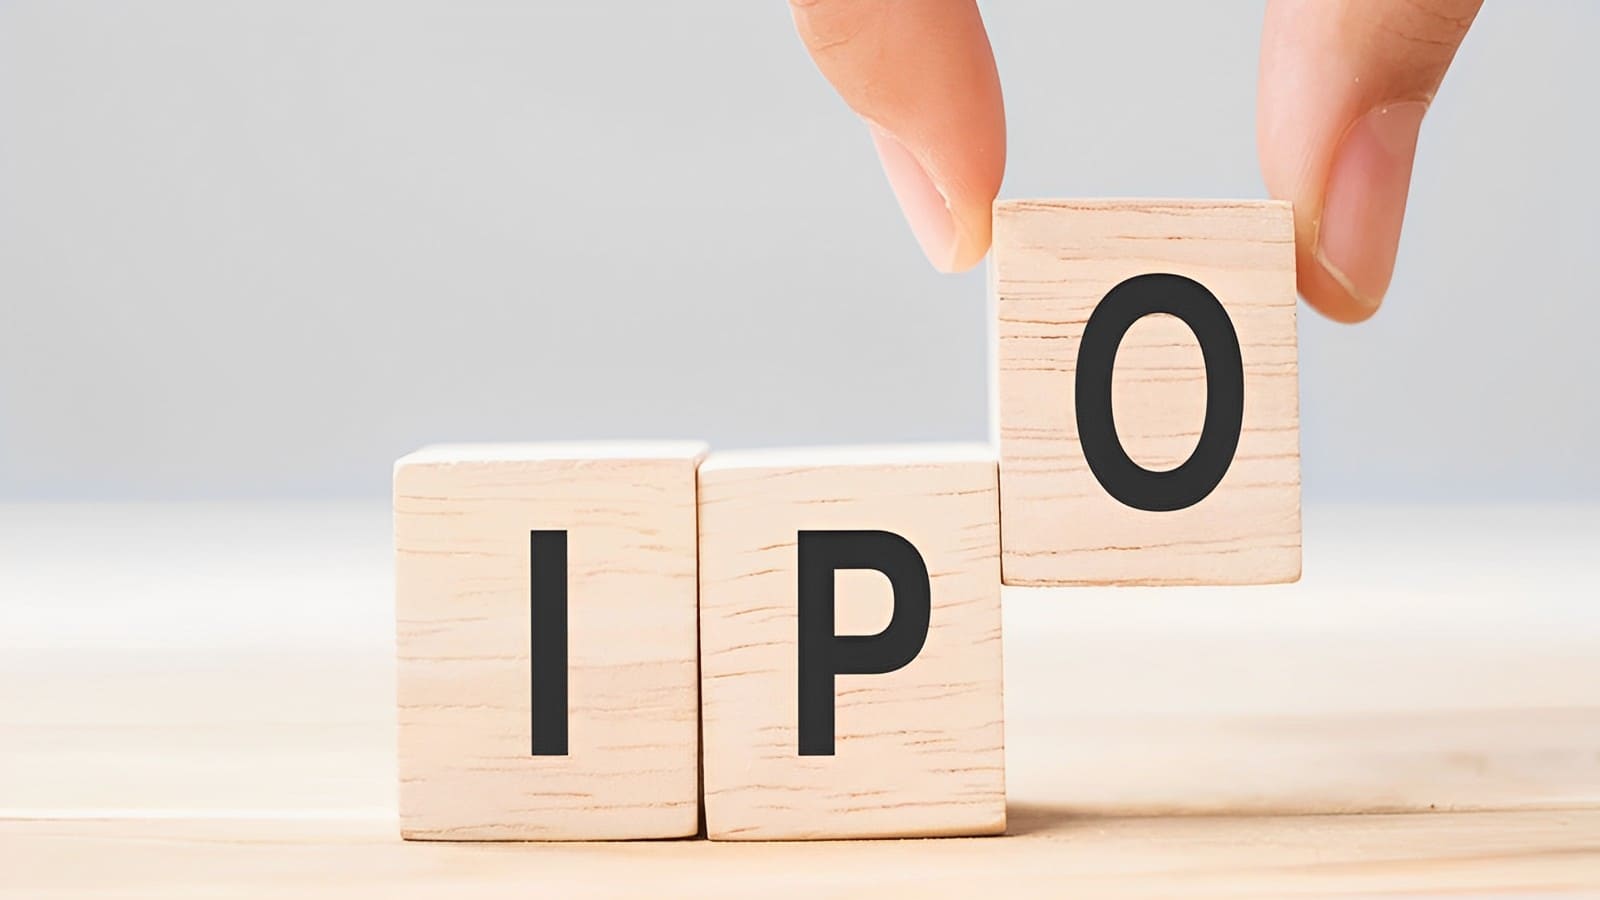 Pyramid Technoplast IPO: 10 Key Facts Before Tomorrow's Opening